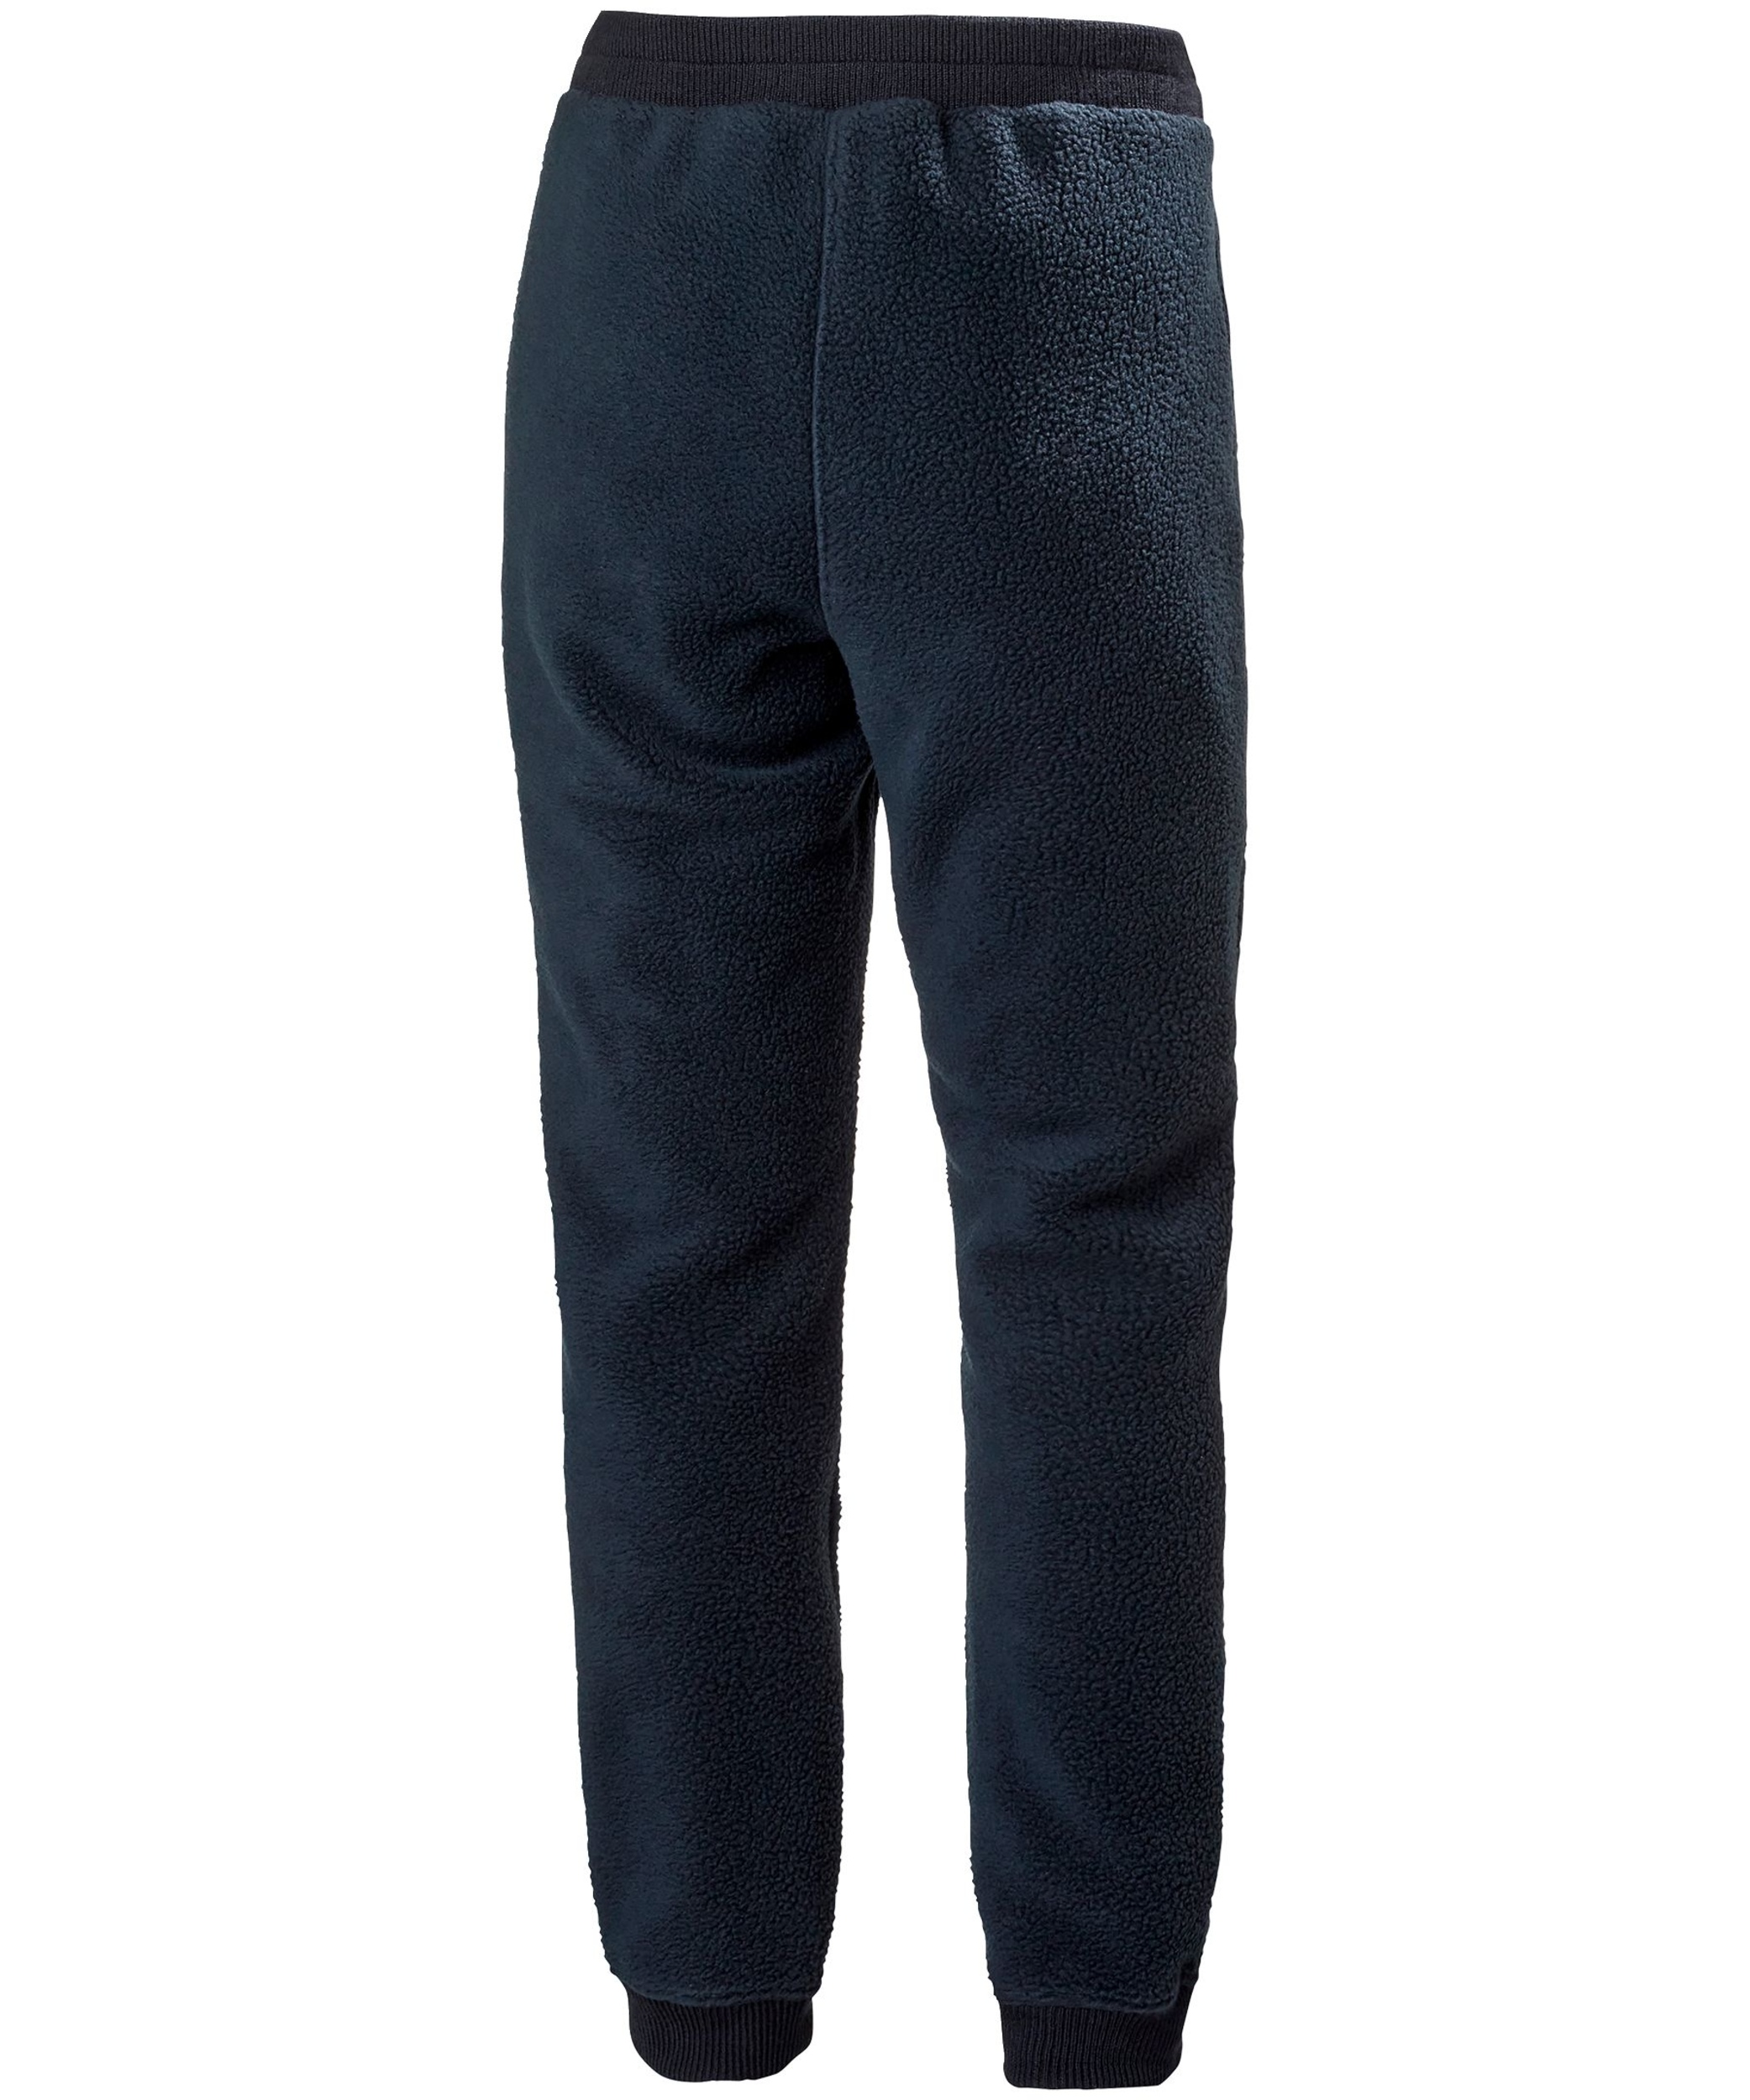 Helly Hansen Workwear Men's Heritage Pile Midlayer Pants | Marks